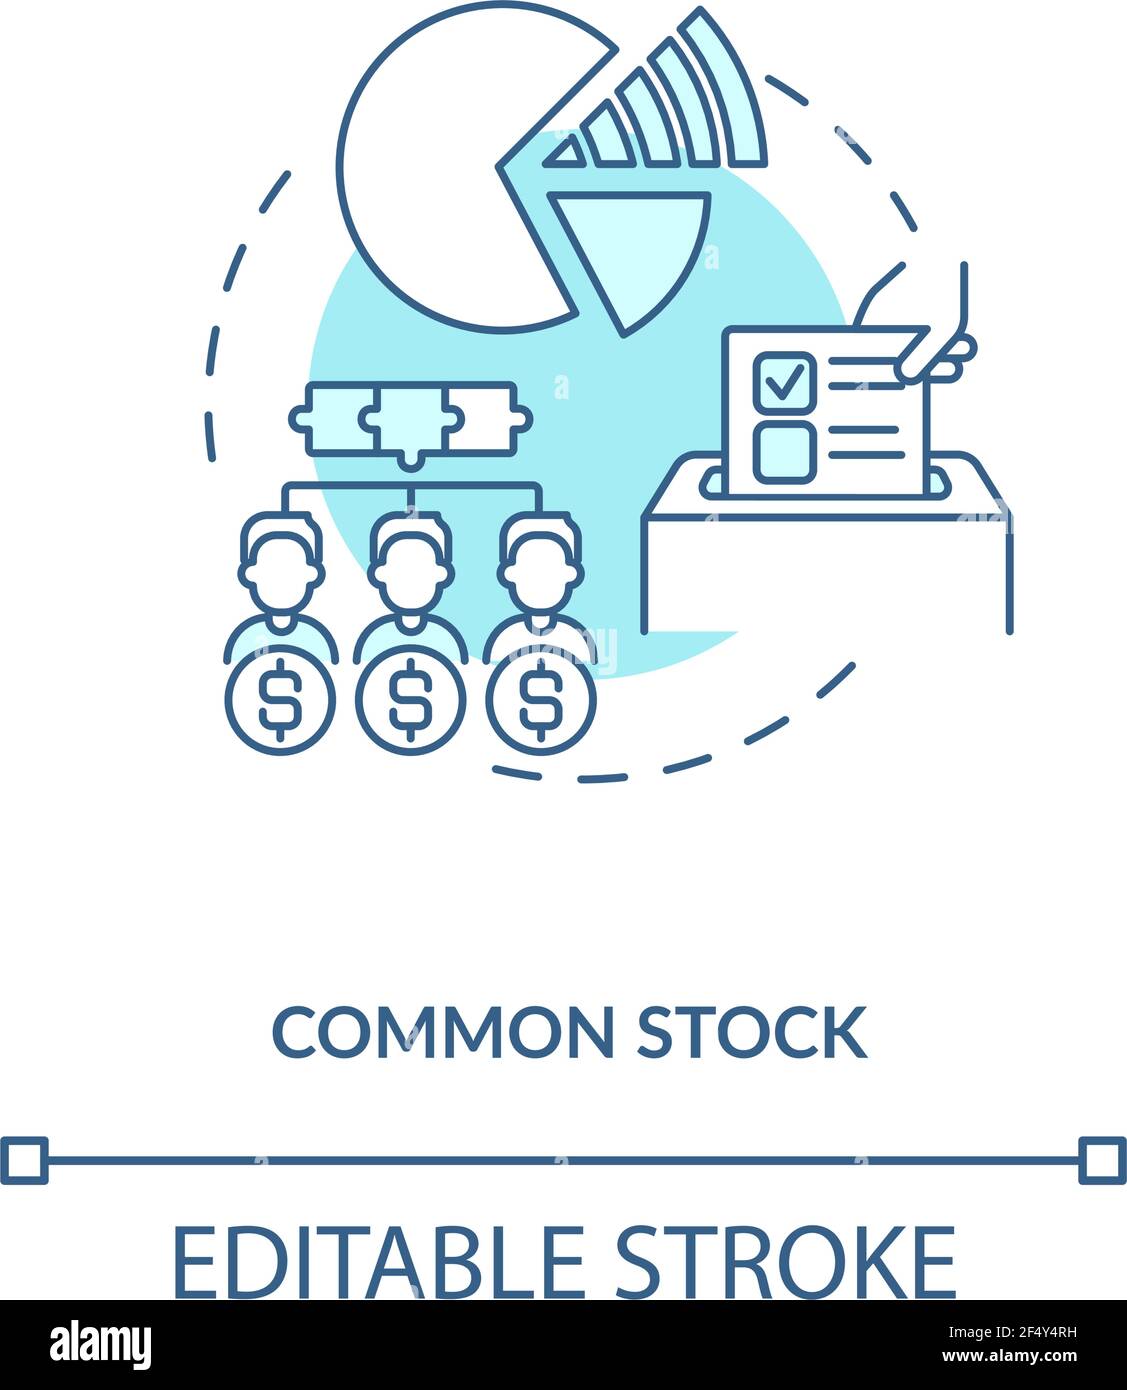 Common stock concept icon Stock Vector